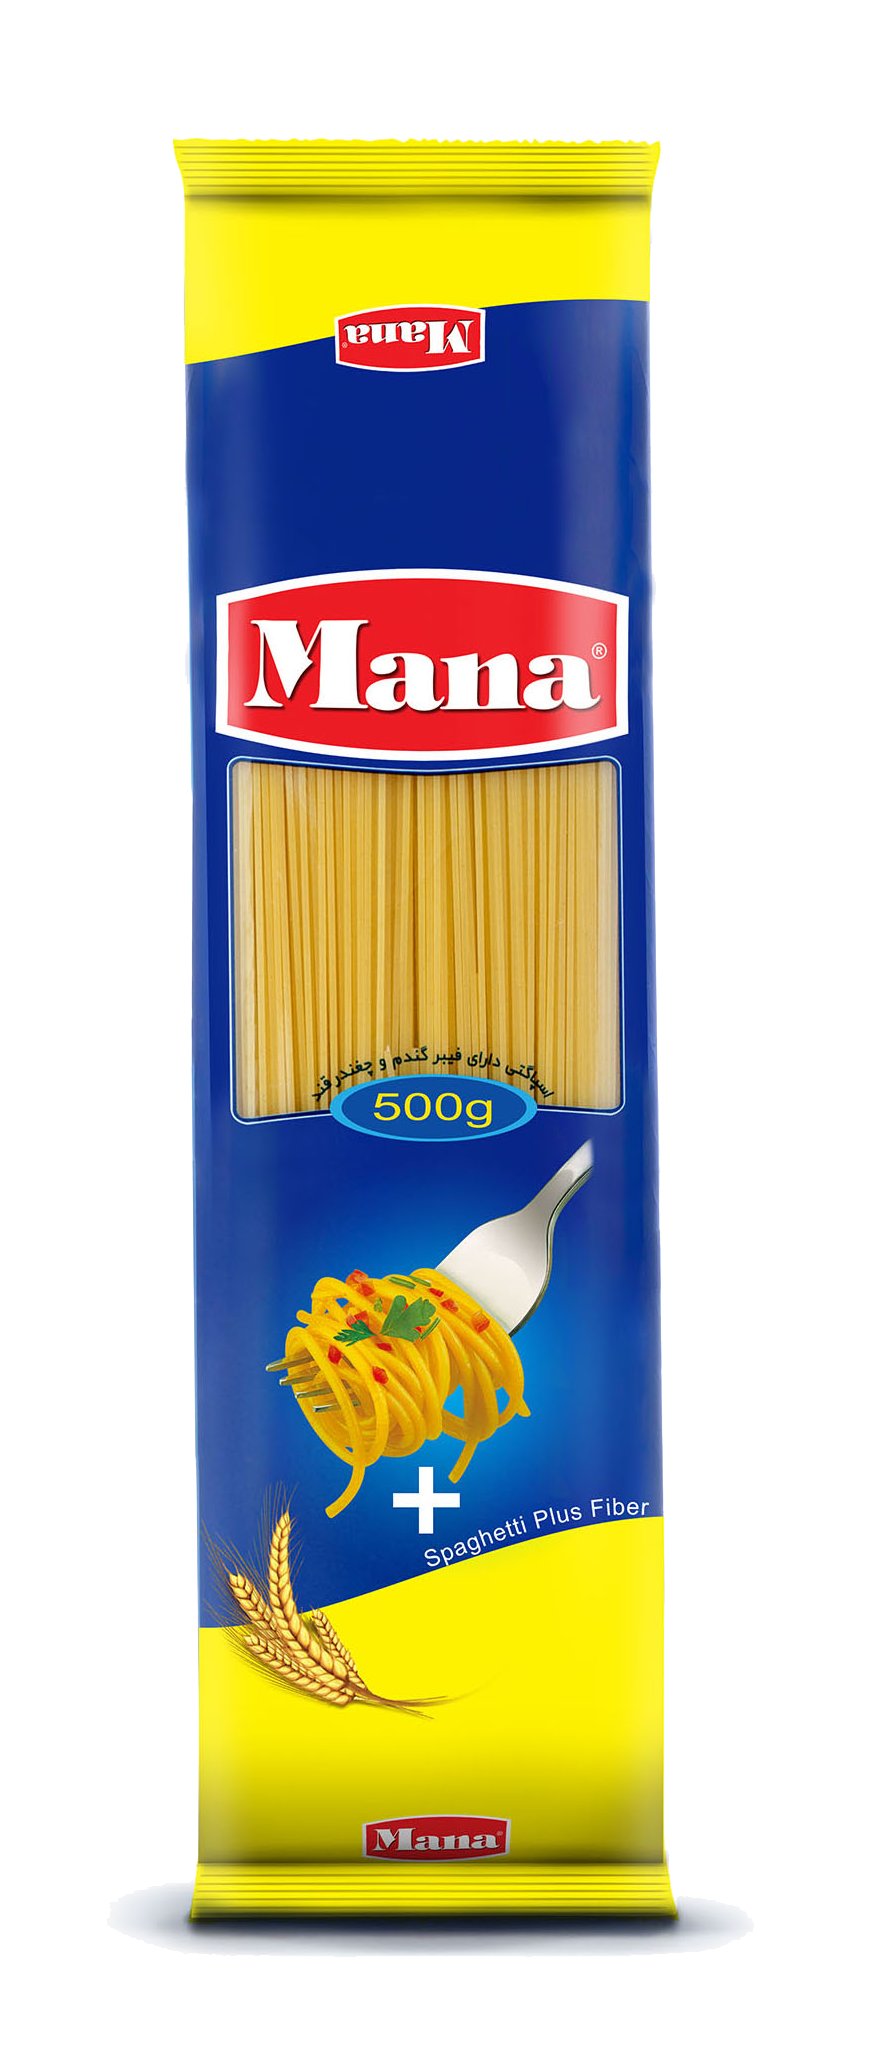 Spaghetti fiber wheat